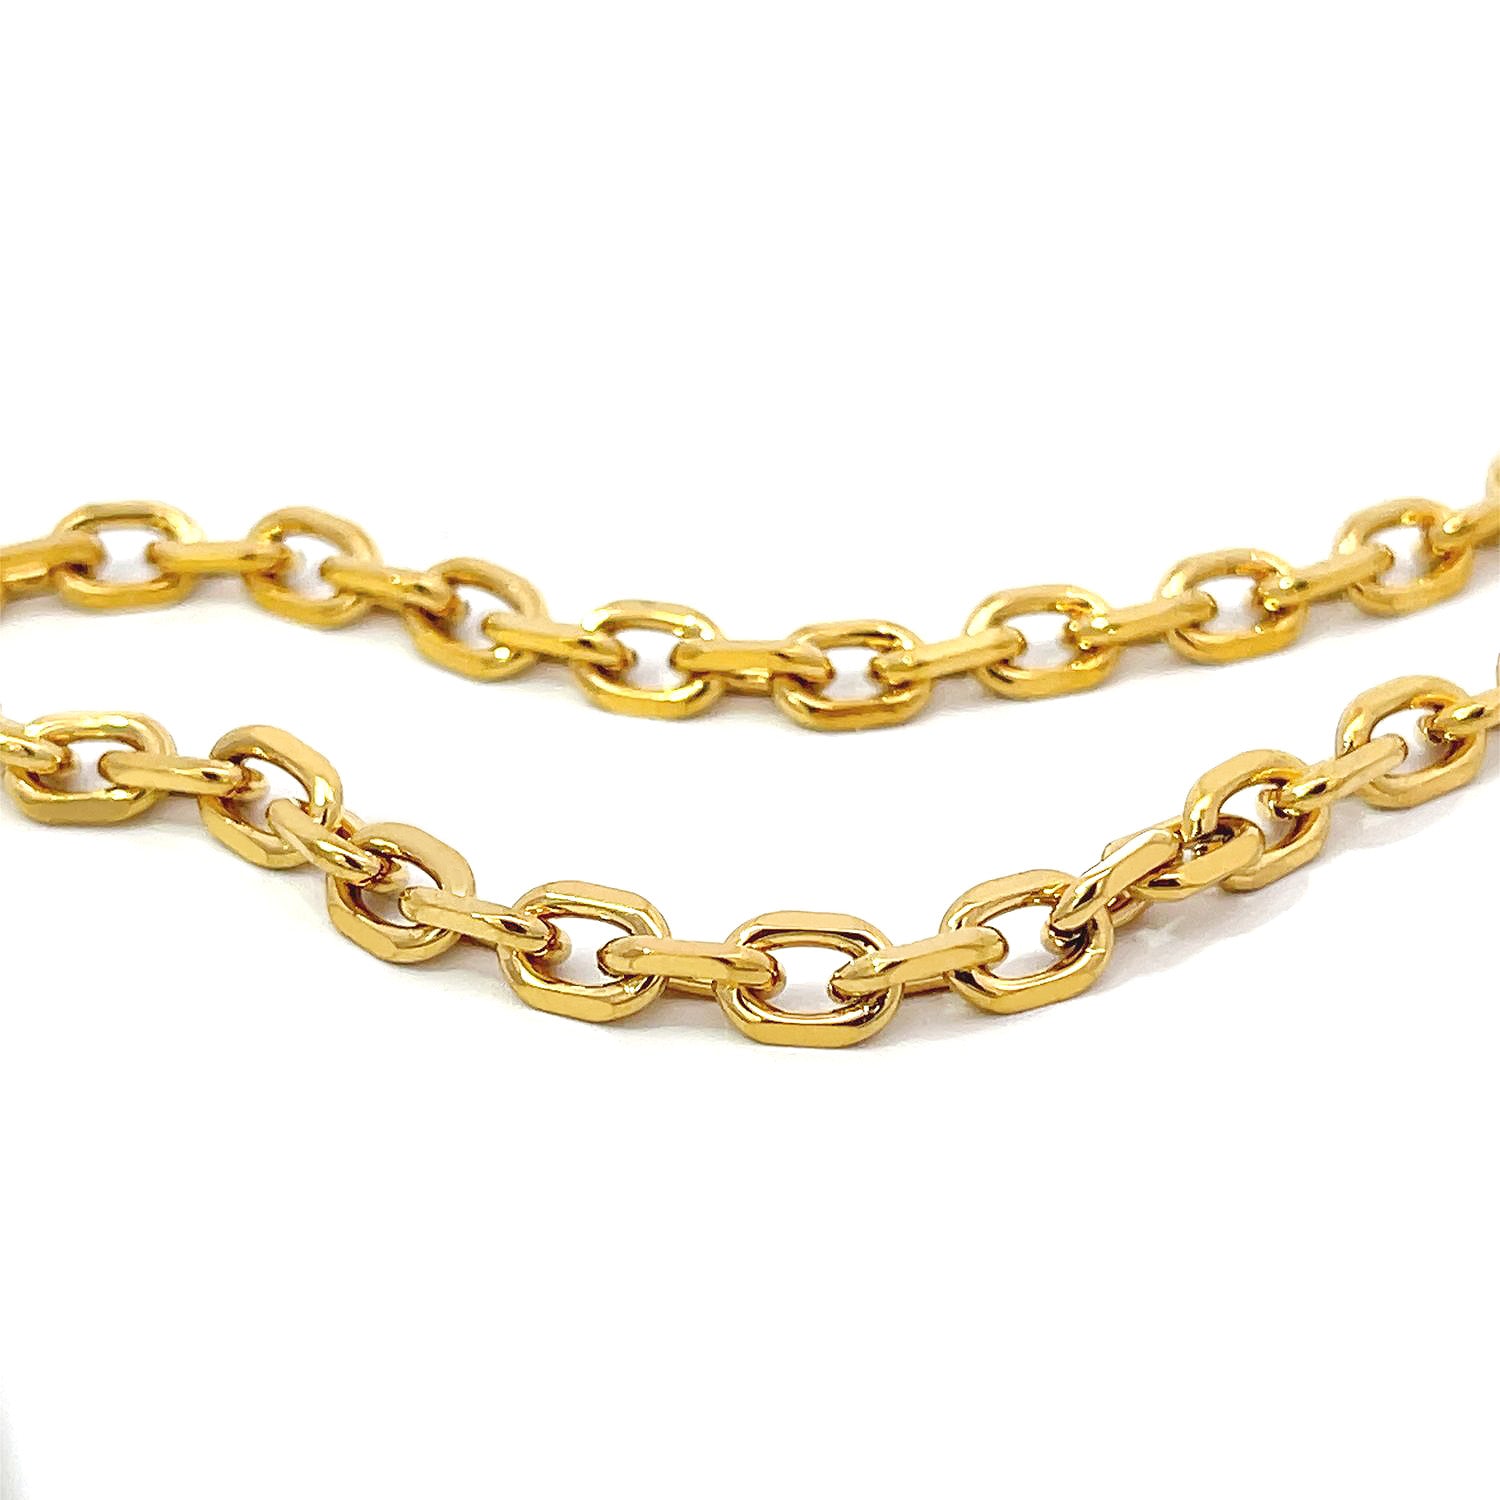 Emery Belcher Chain Necklace: A Timeless Statement Piece